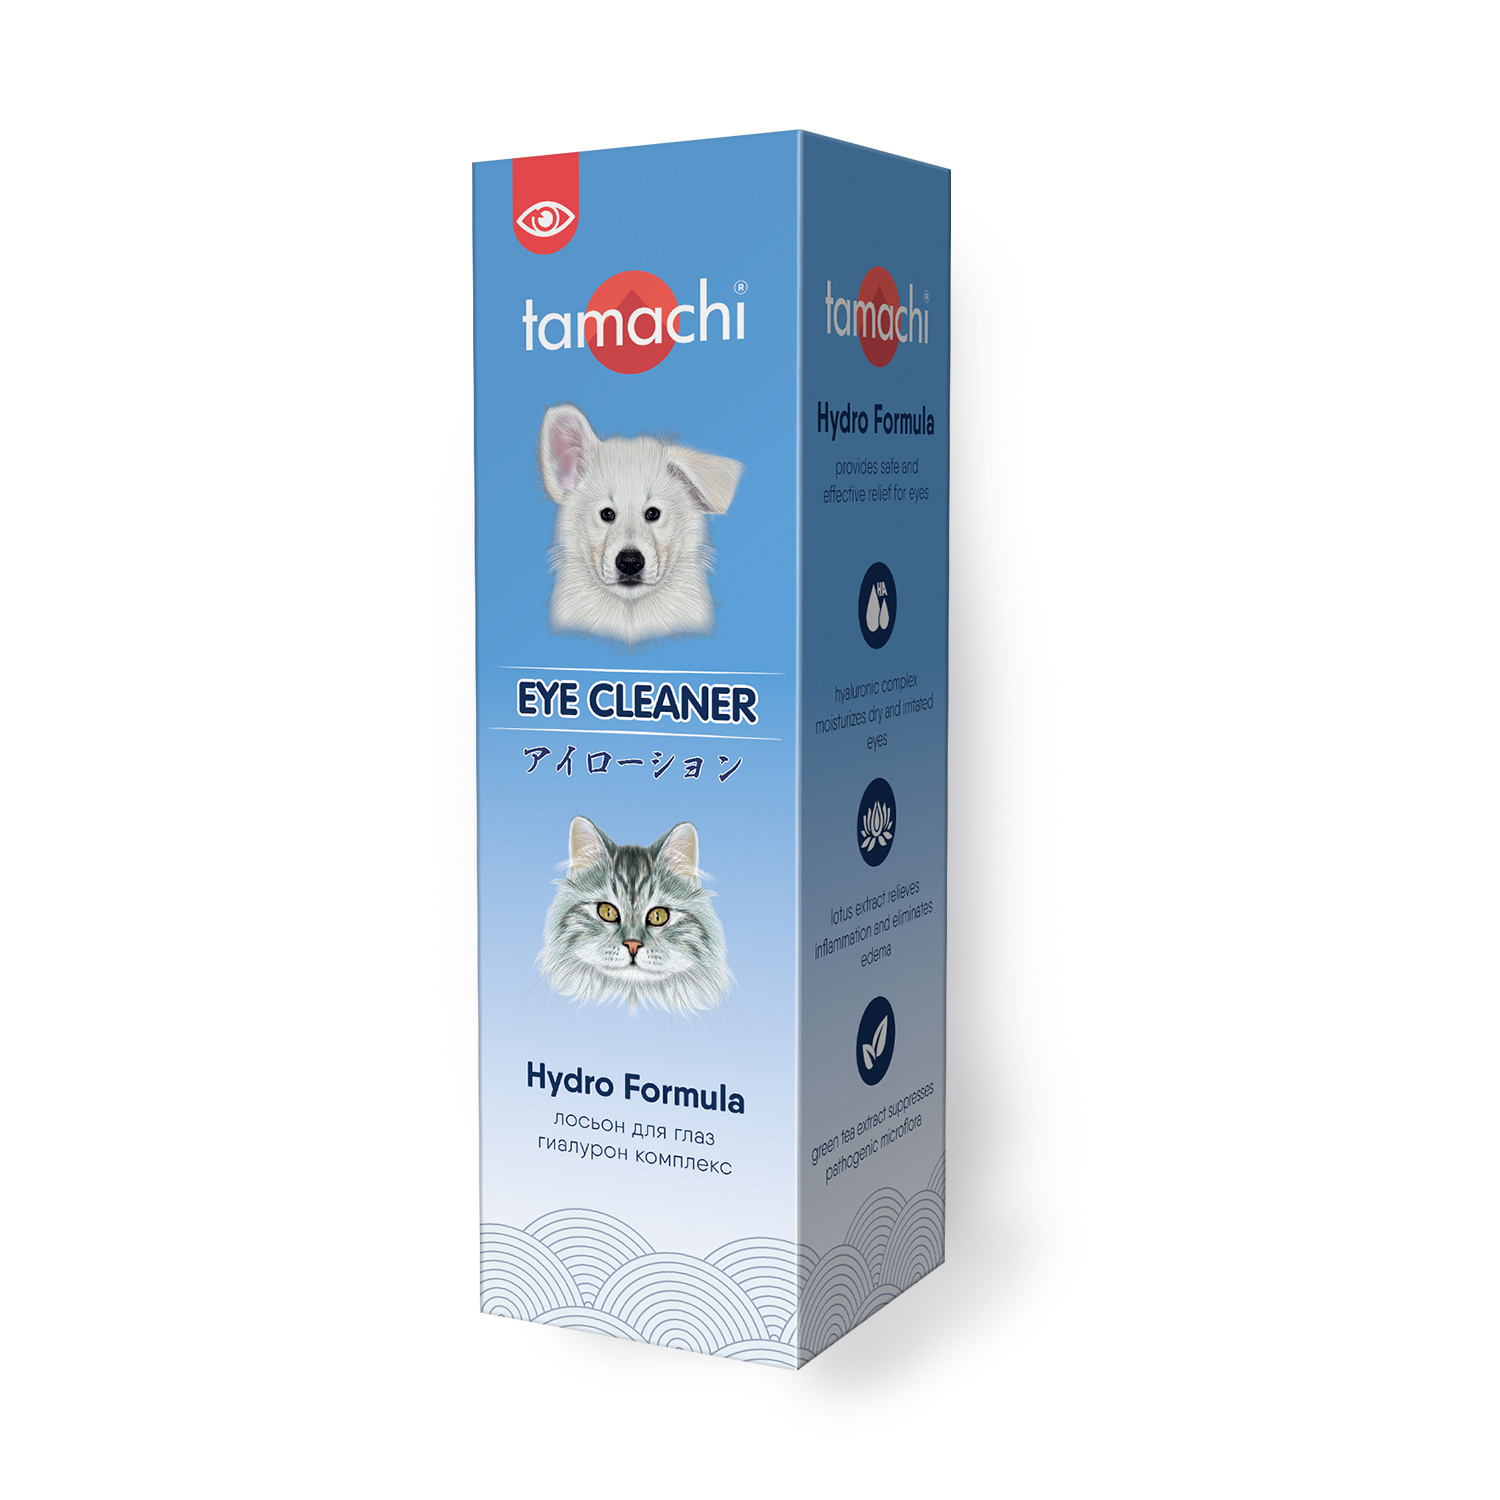 Tamachi Tamachi лосьон для глаз, 110 мл (140 г) лосьон для глаз для животных tamachi тамачи 110мл